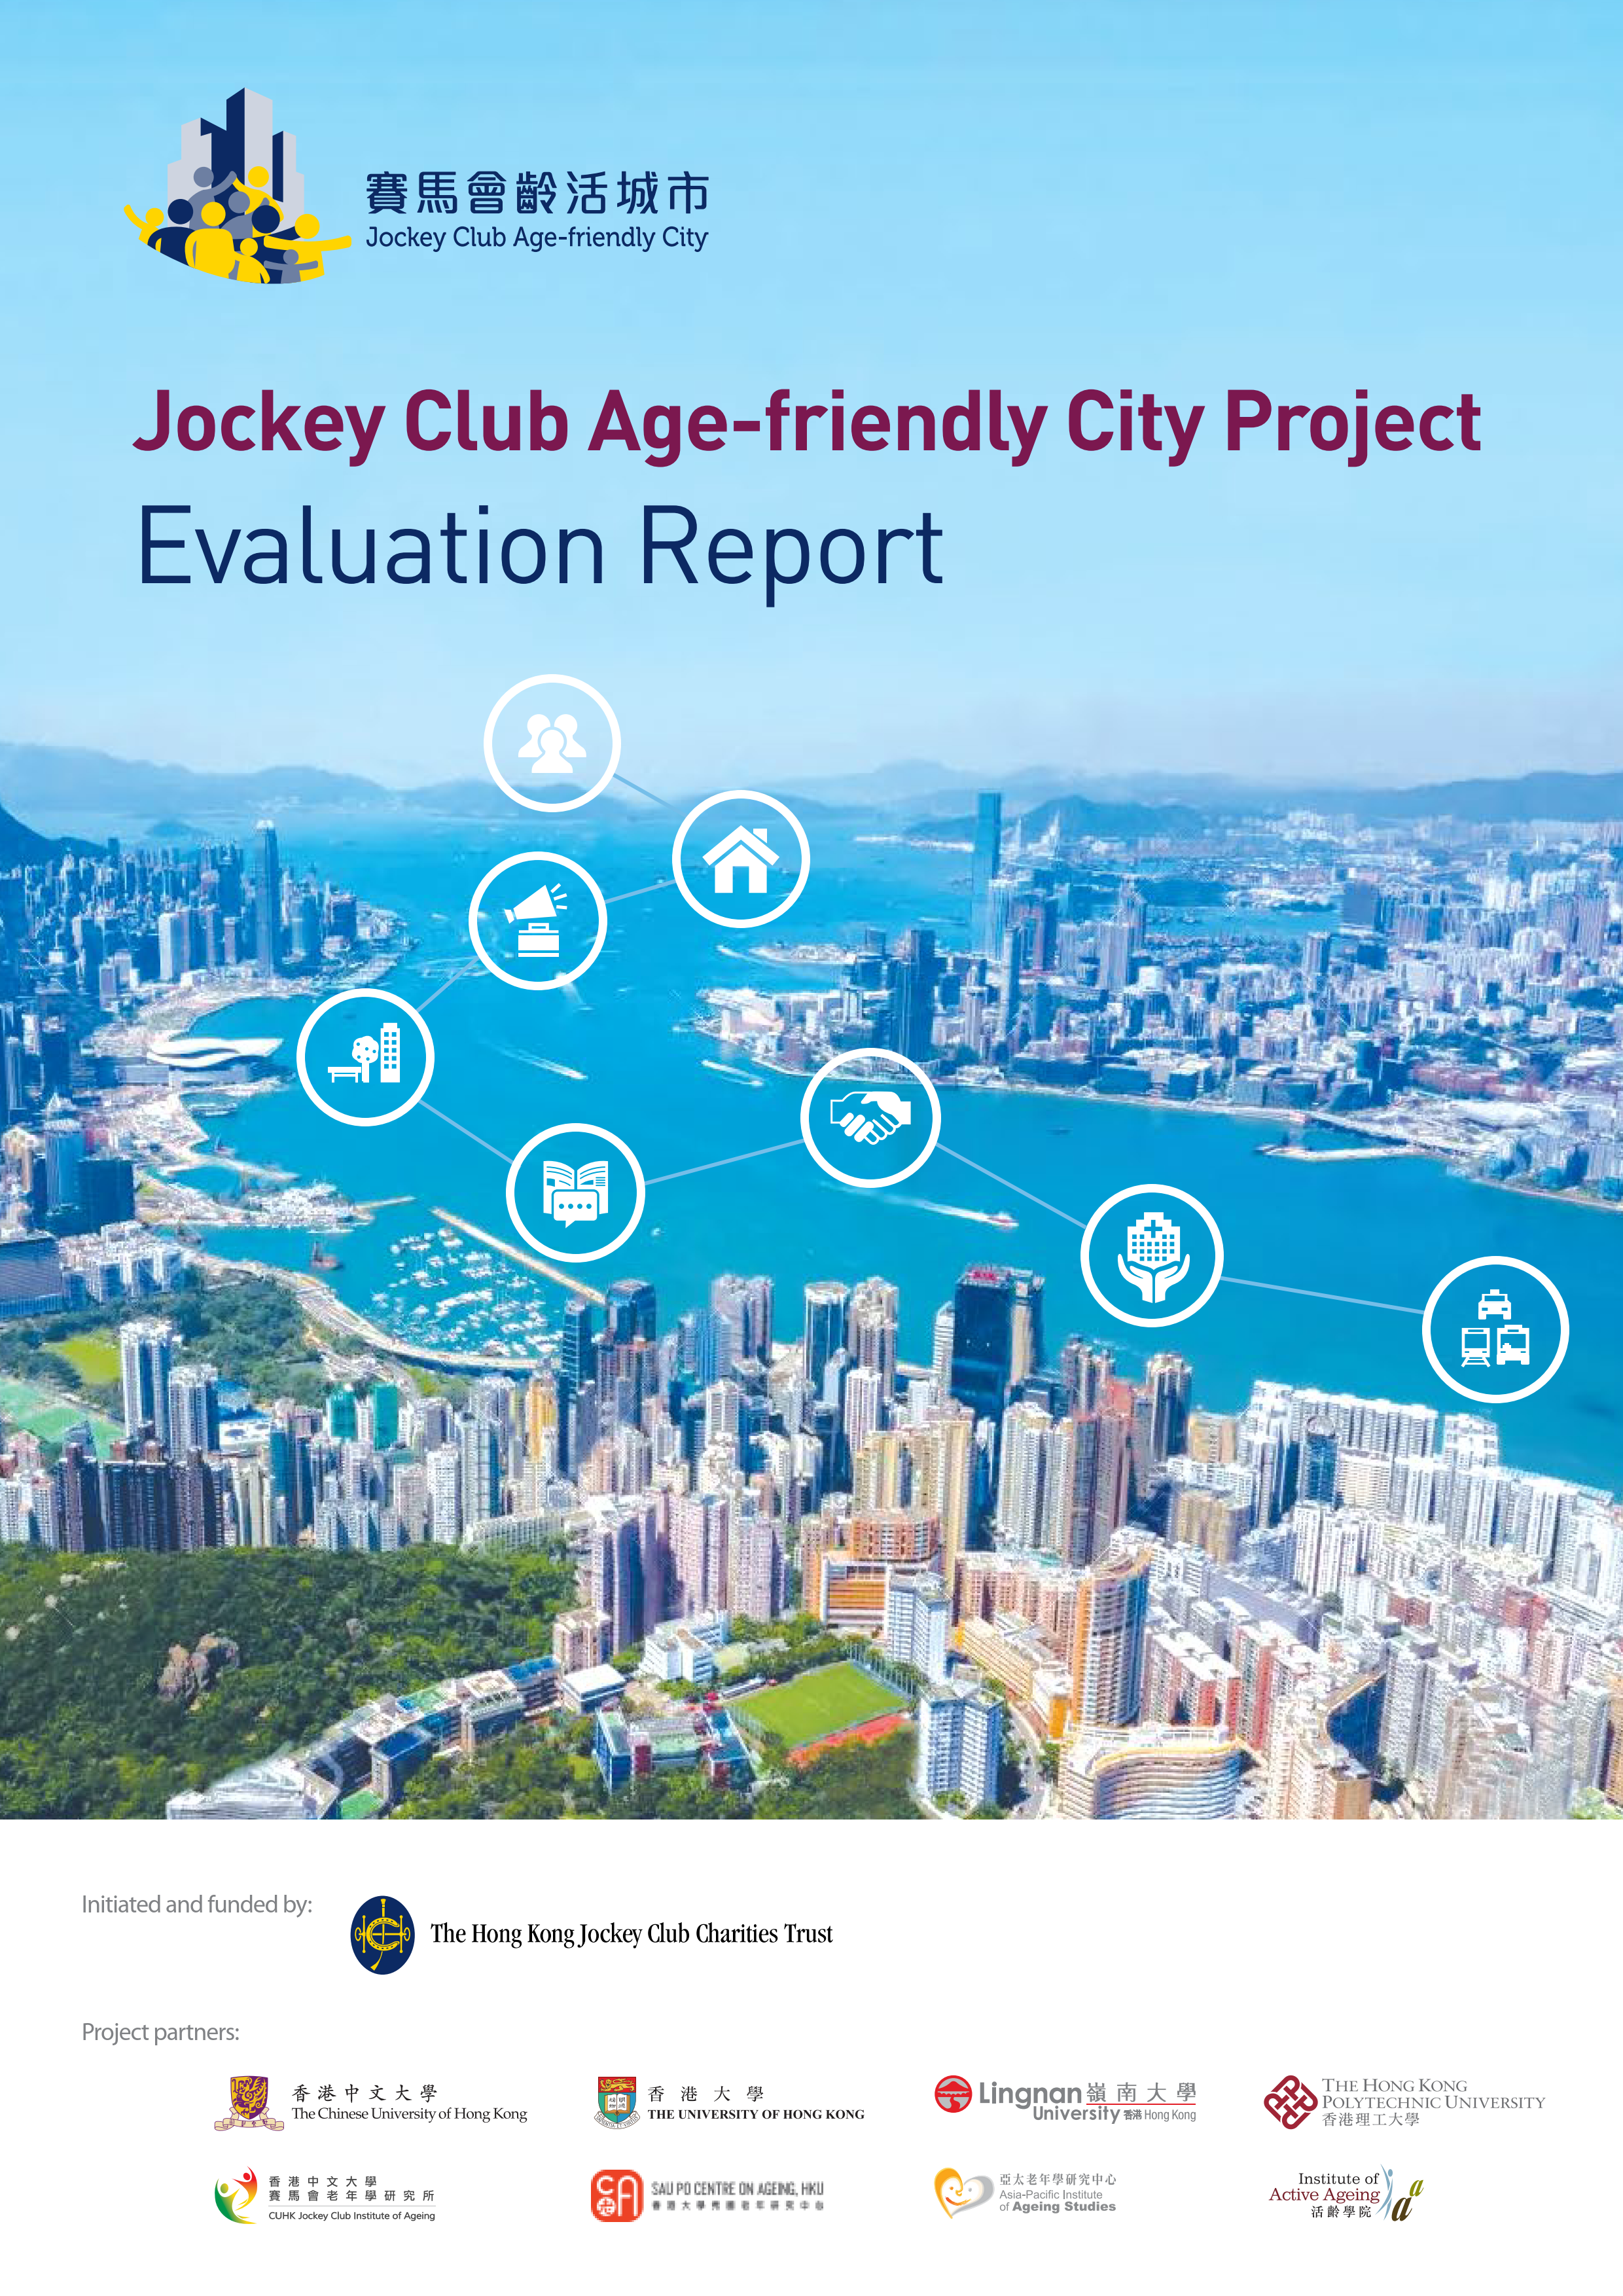 JCAFC Project Evaluation Report_final_1